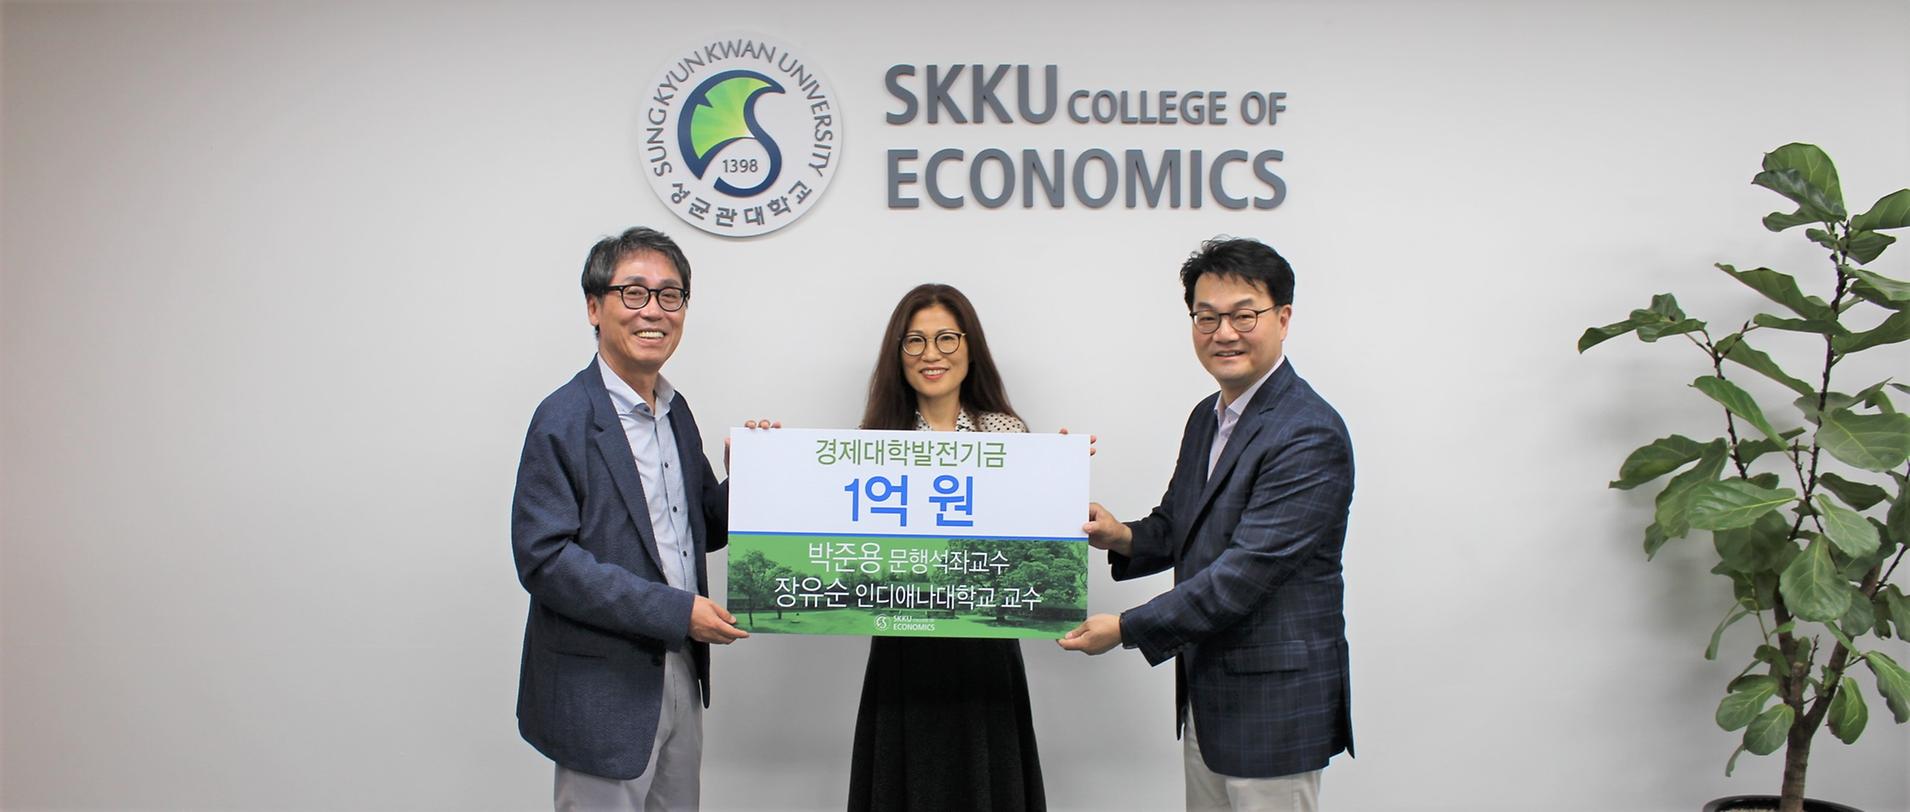  Prof. Joon-Yong Park and Prof. Yoo-Soon Jang Donate 100 million KRW